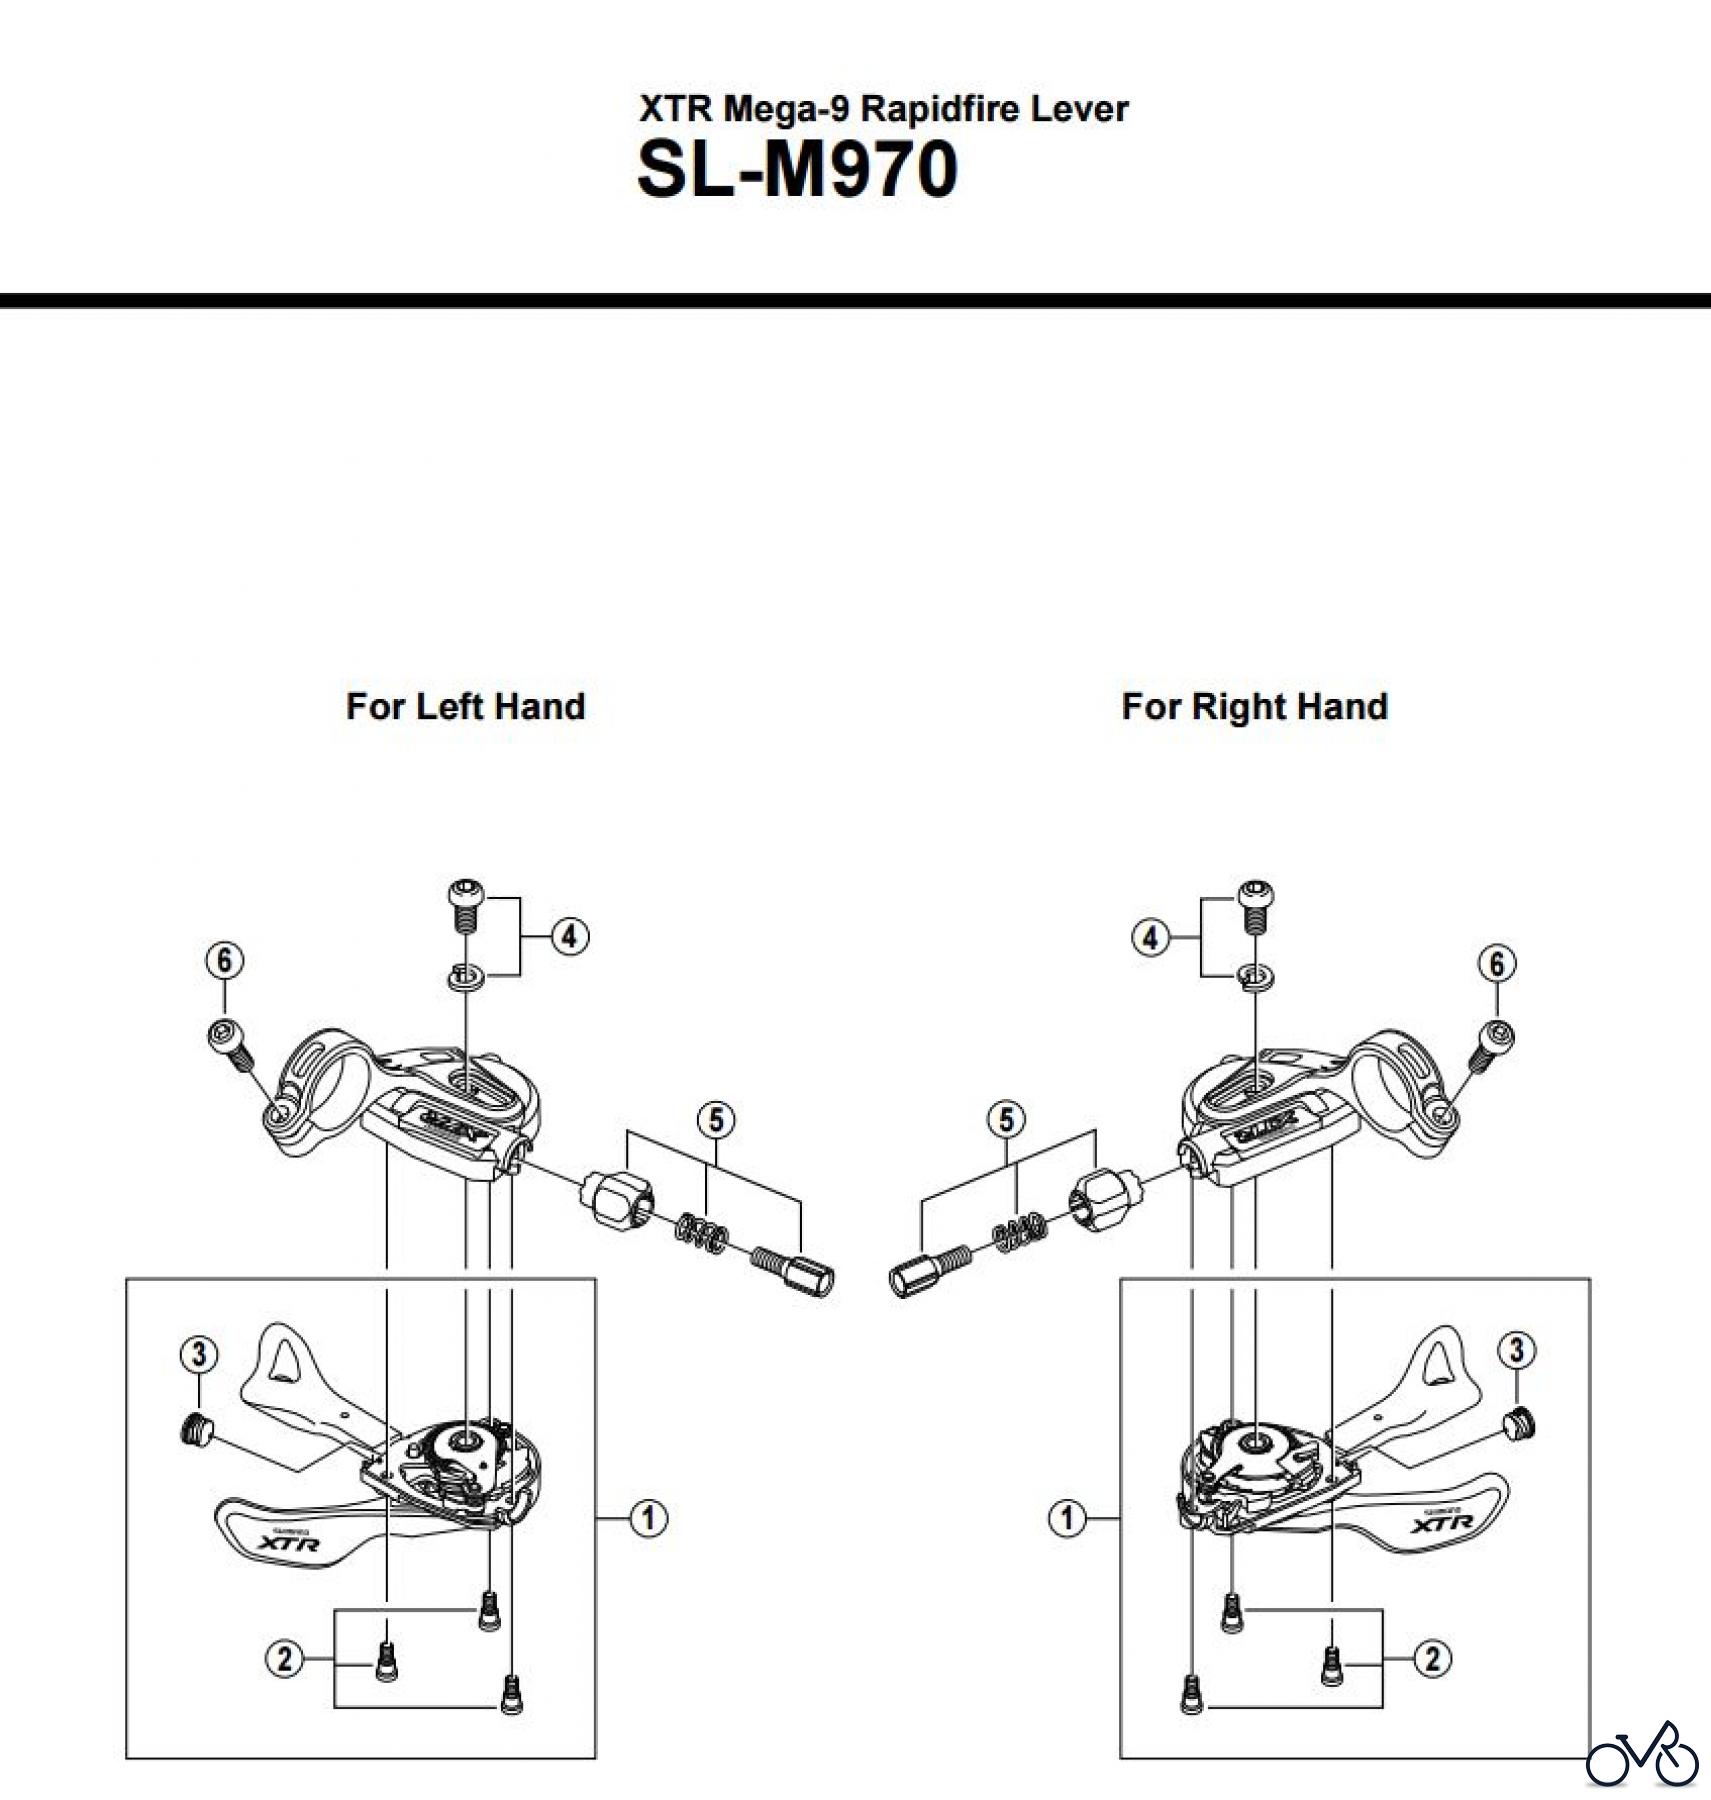  Shimano SL Shift Lever - Schalthebel SL-M970 -2610 XTR Mega-9 Rapidfire Lever